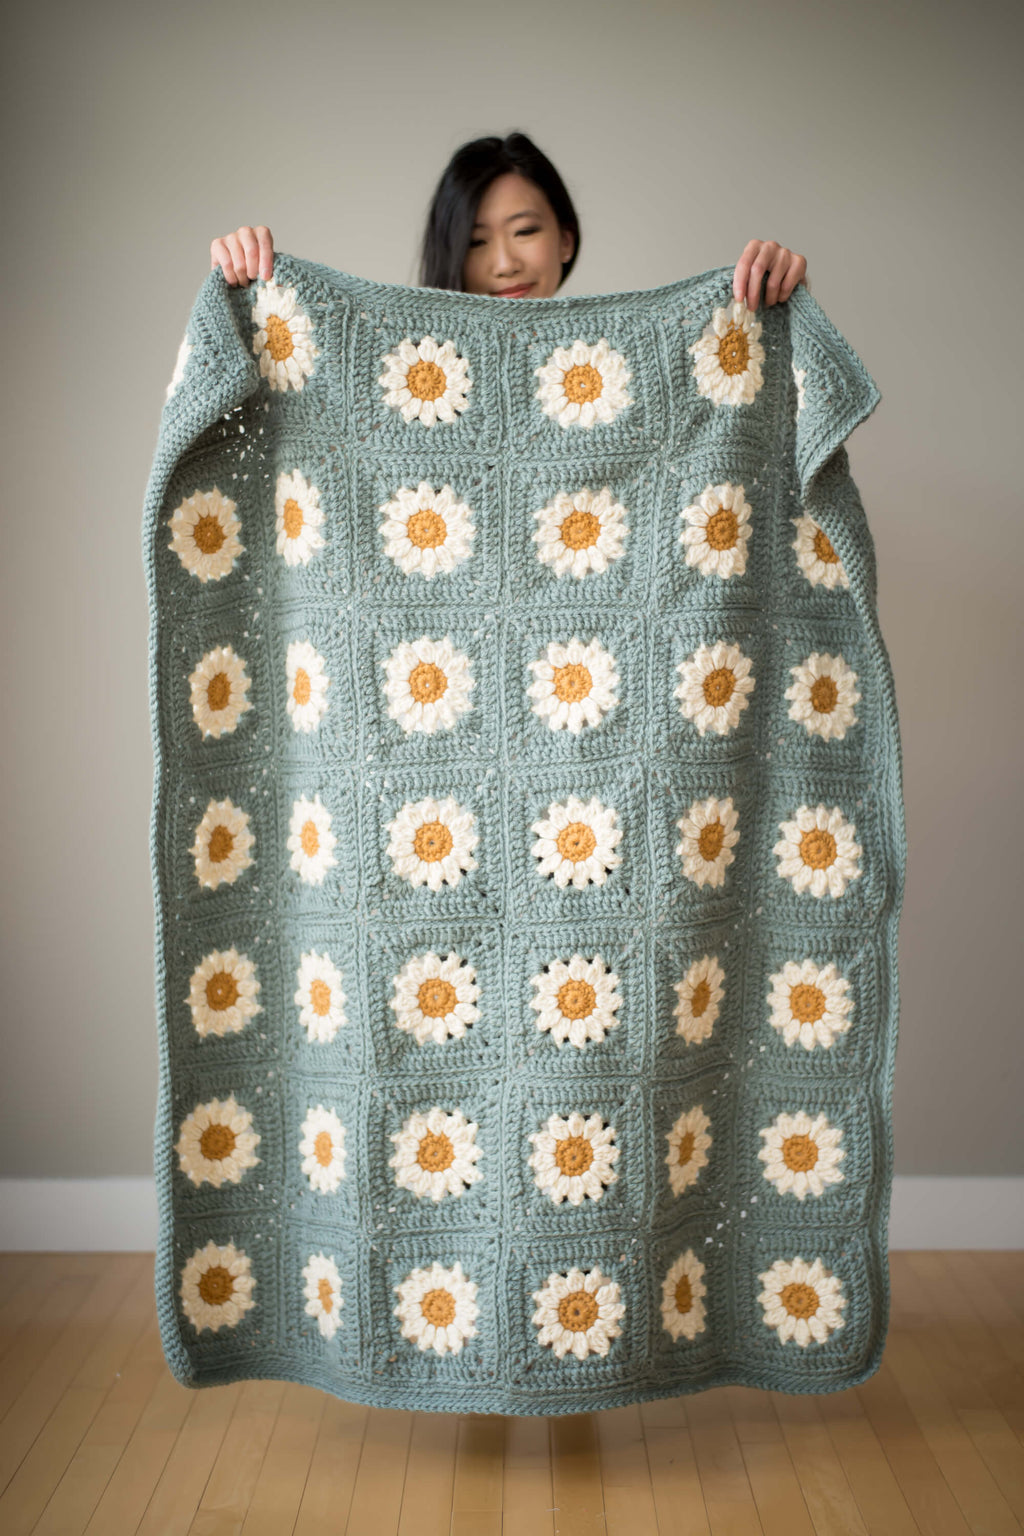 Chunky Granny Square Blanket - Free Crochet Pattern